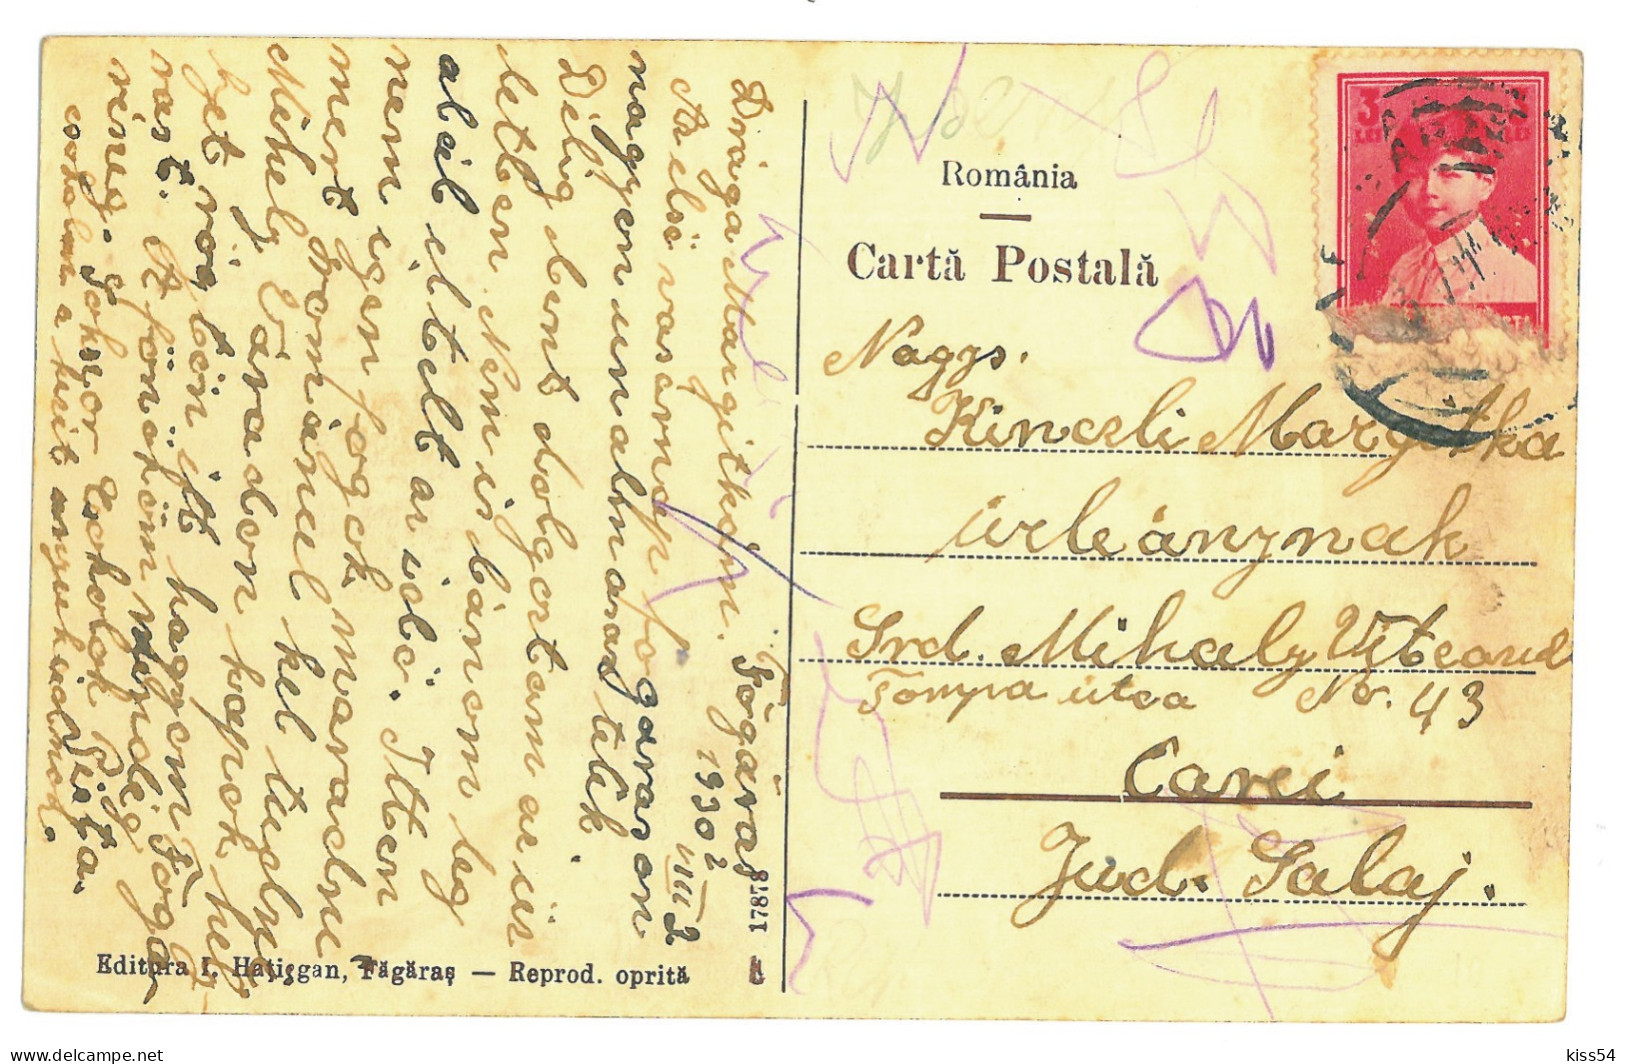 RO 999 - 23535 FAGARAS, Brasov, Radu Negru High School, Romania - Old Postcard - Used - 1930 - Romania